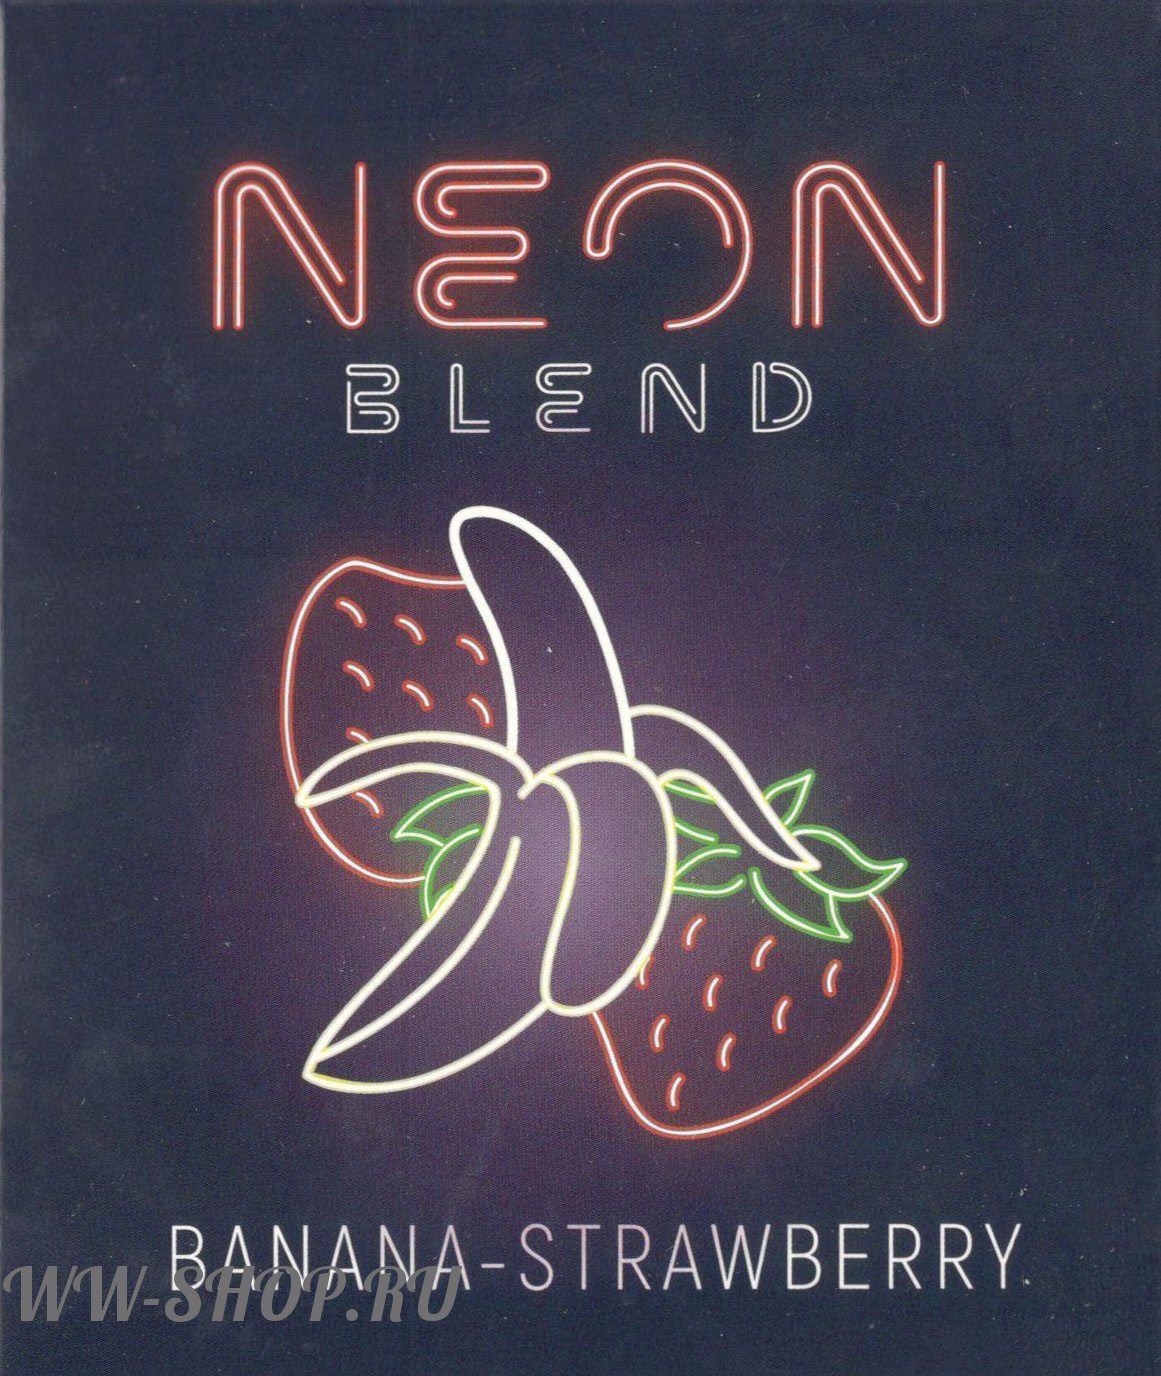 neon- клуб с бананом (strawberry banana) Тверь